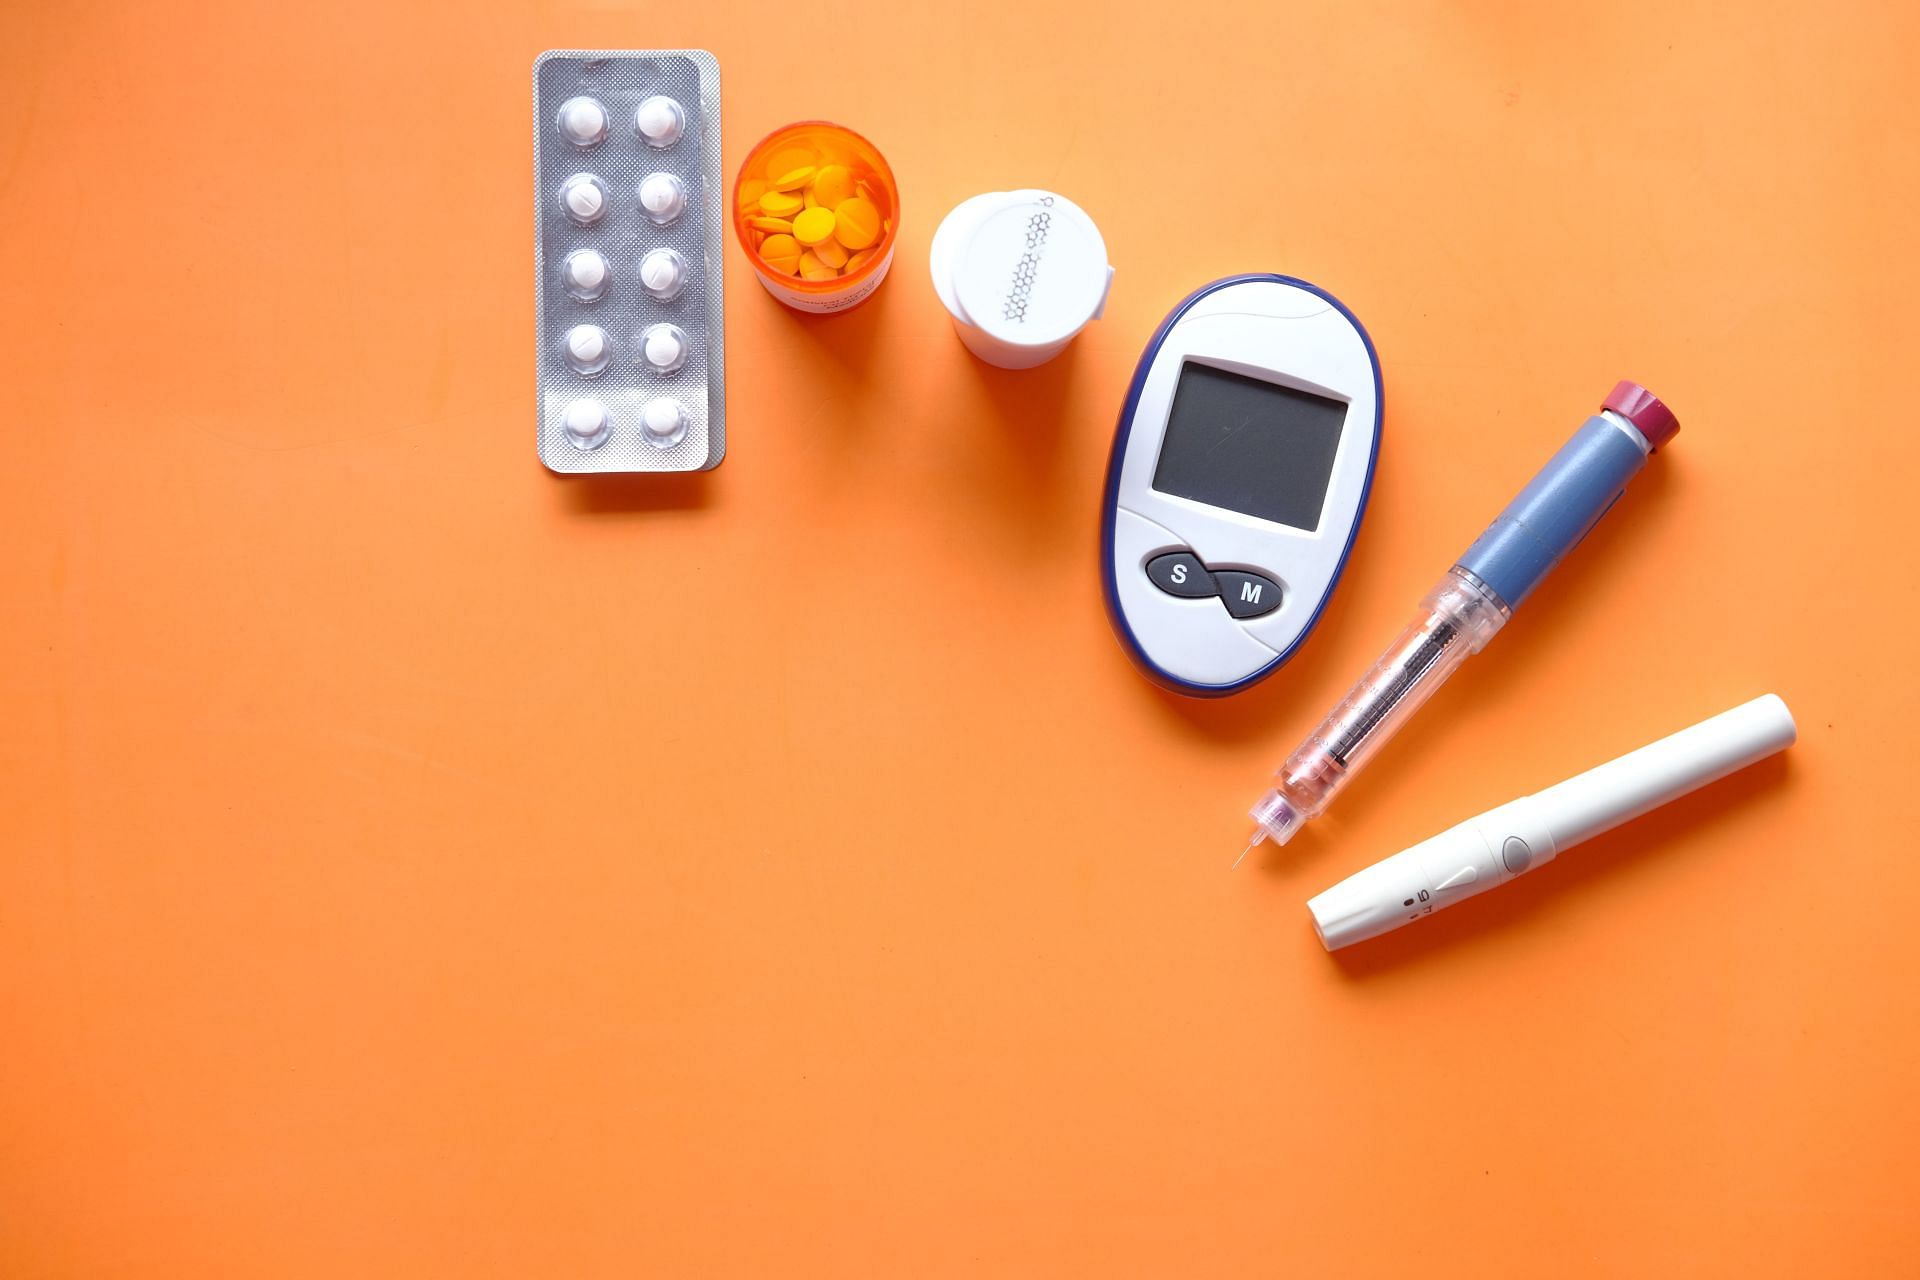 The Klinio plan aims to help people manage blood sugar level. (Image via Unsplash/Towfiqu Barbhuiya)